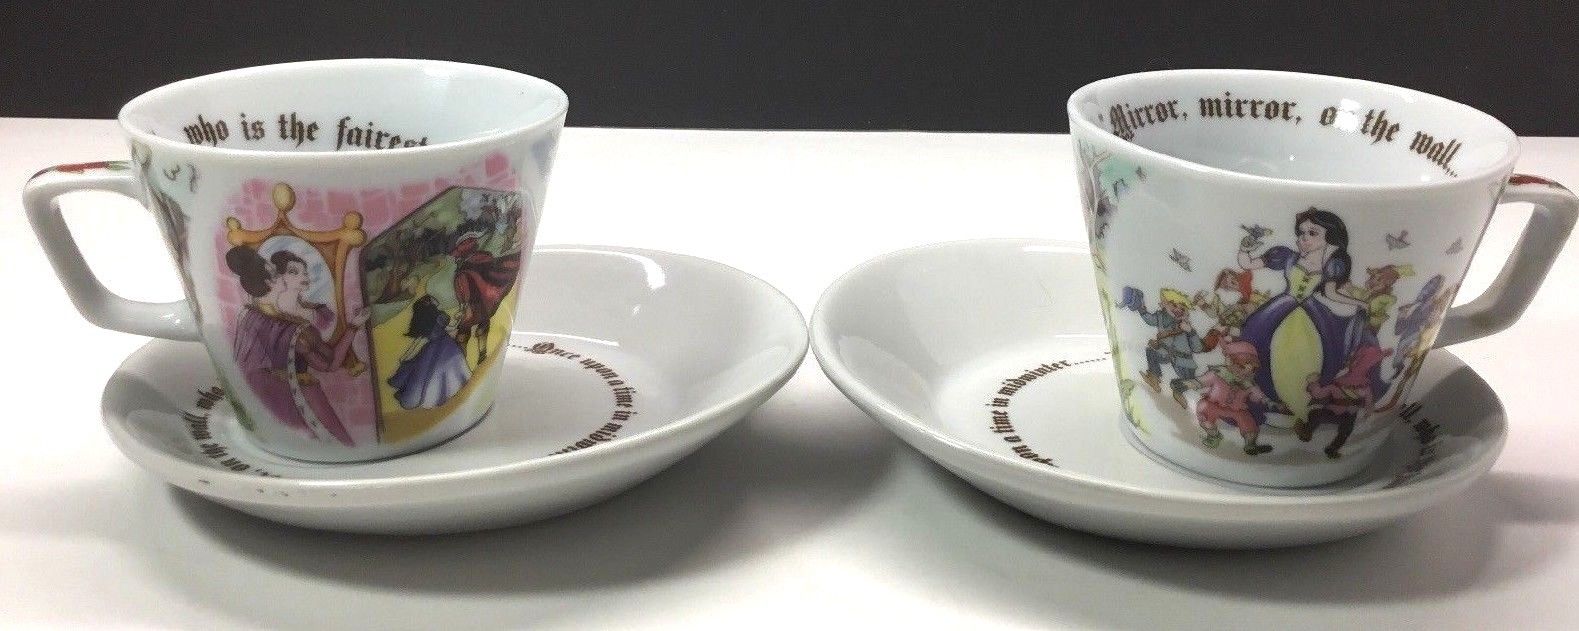 Rare Lot Of 2 Disney Snow White 2012 Paul Cardew Tea Cup & Saucer Sets